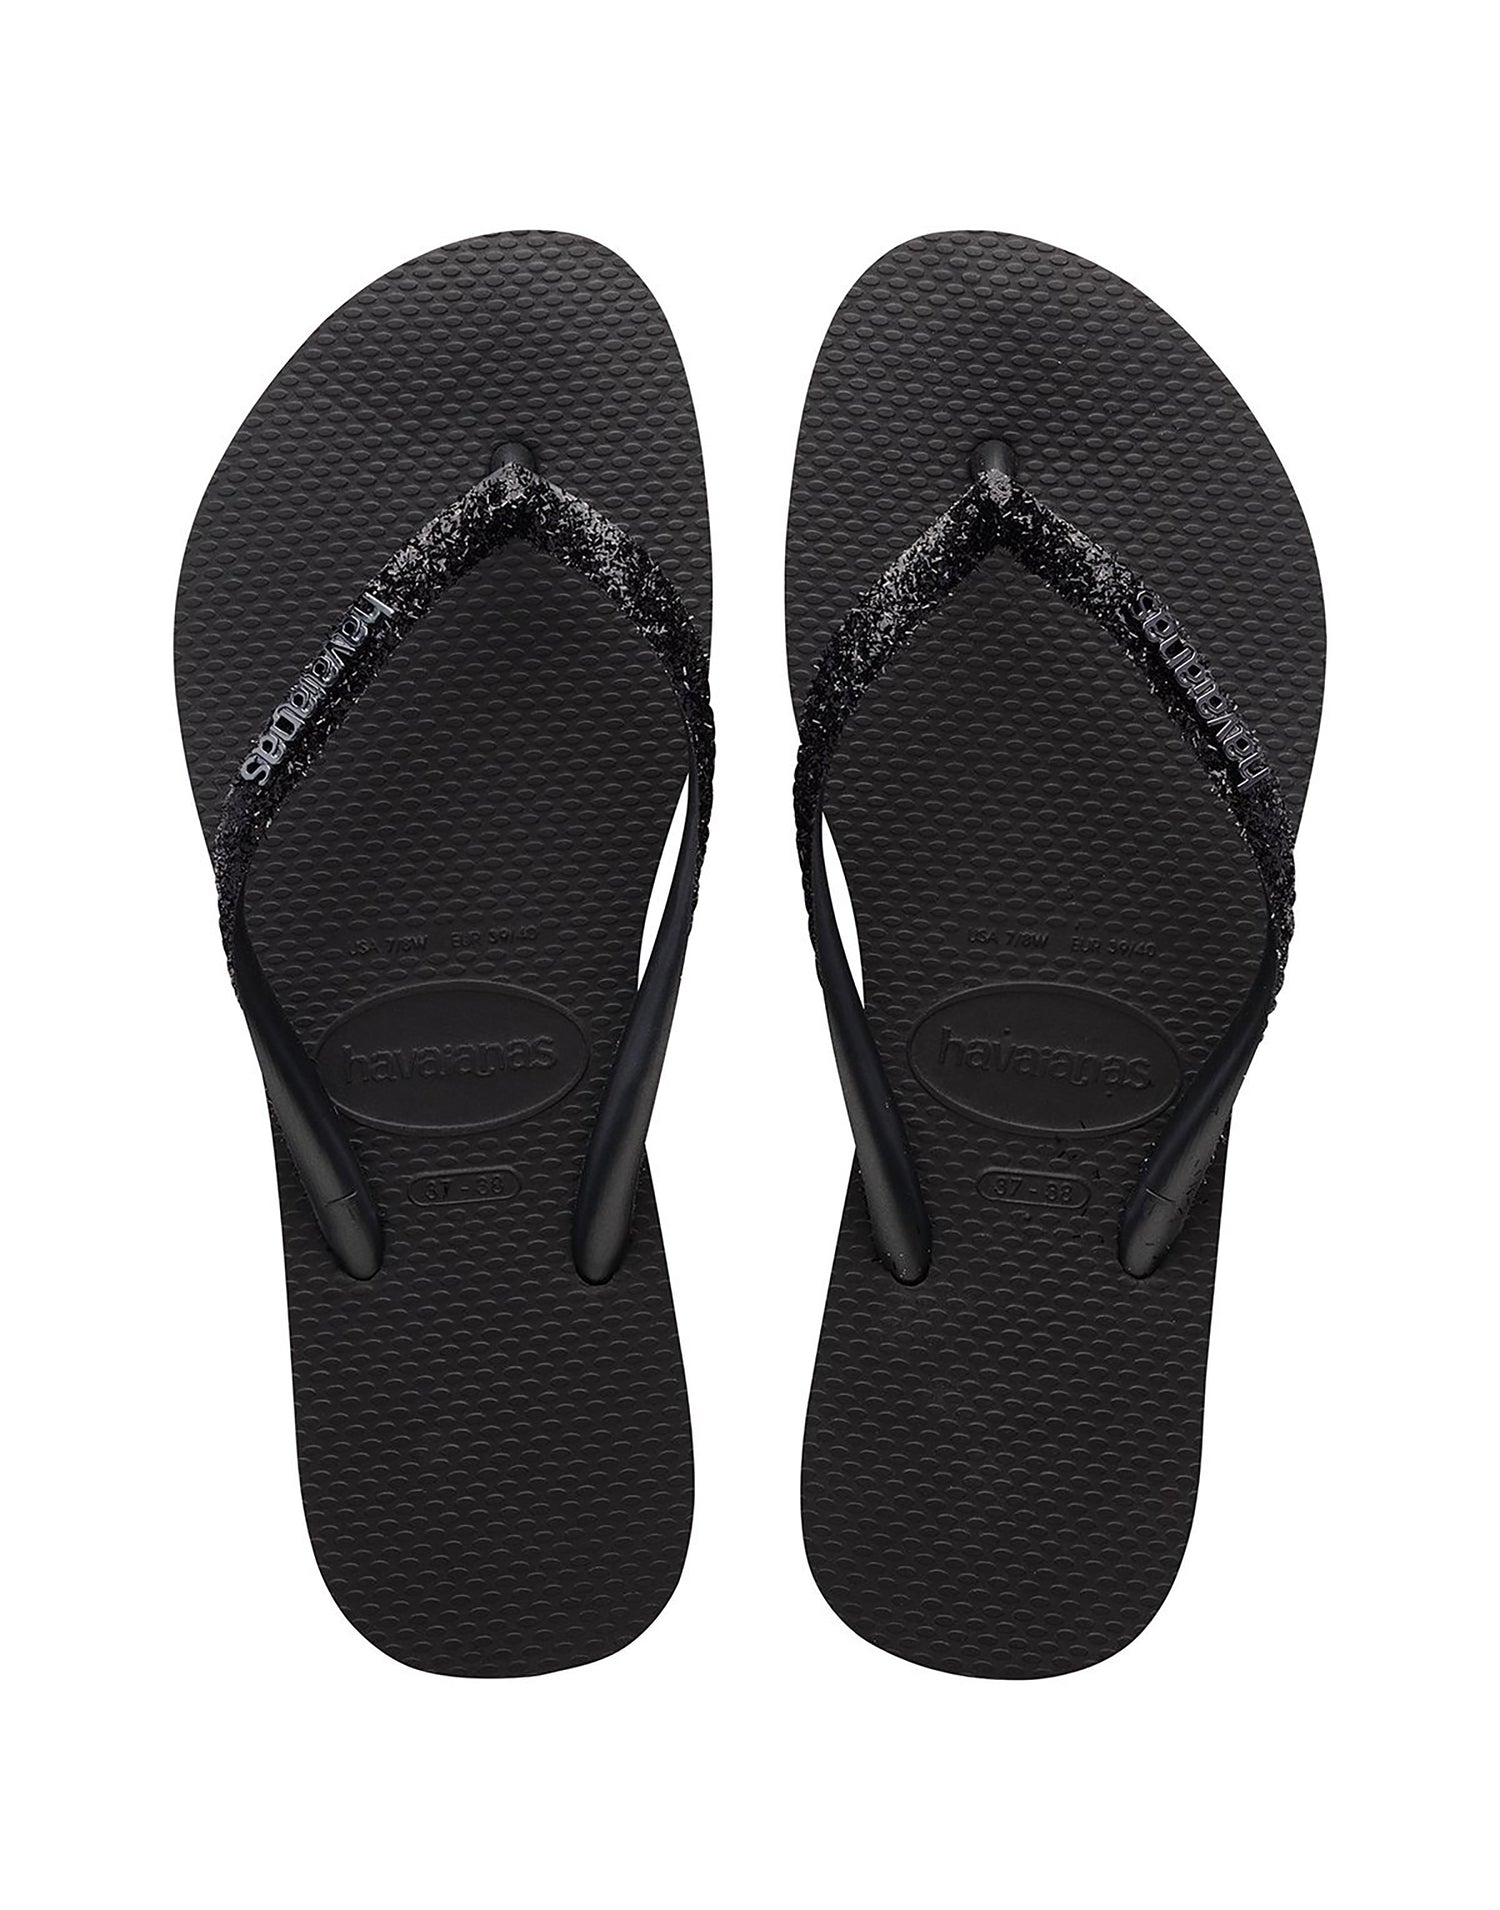 Slim Glitter II Sandal by Havaianas in Black - Front View